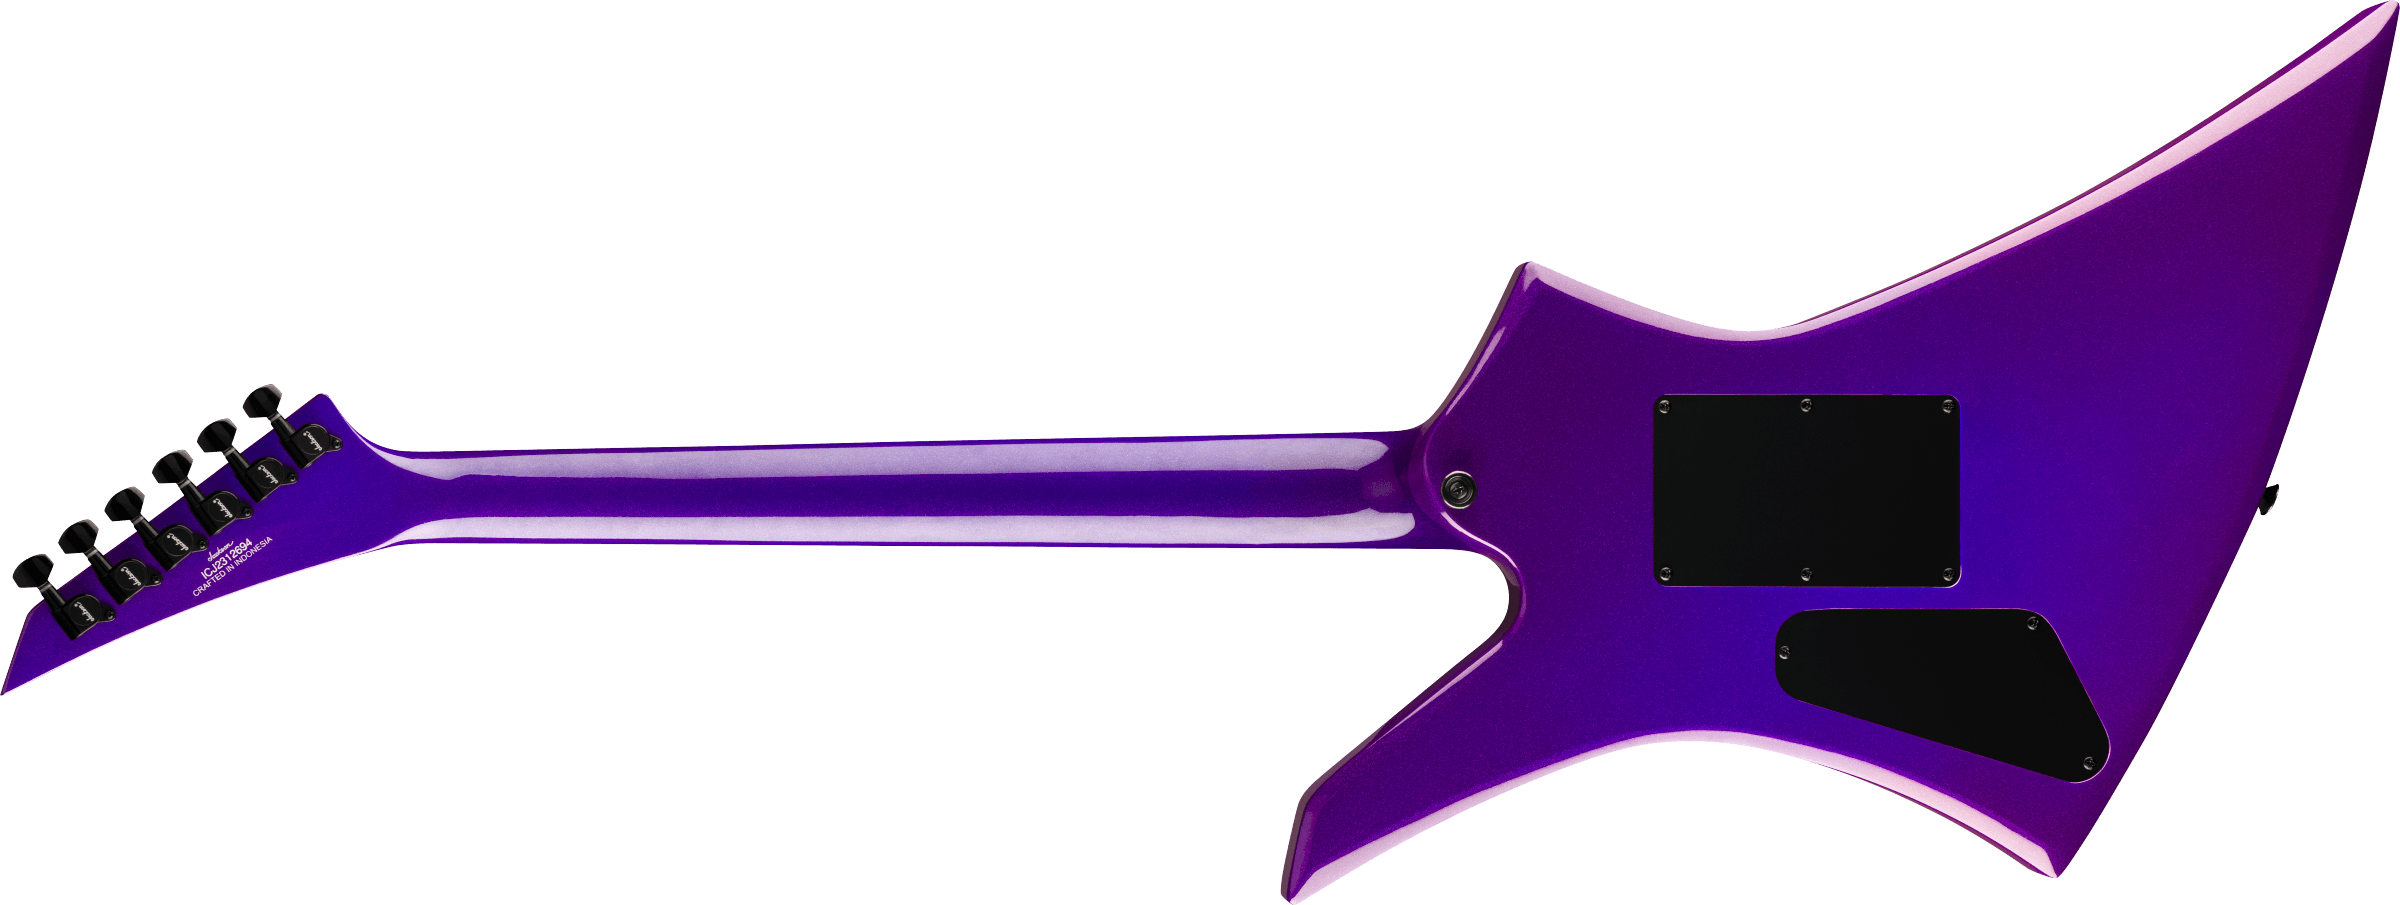 Jackson Kelly Kex X-series Trem Fr Hh Lau - Deep Purple Metallic - Metal electric guitar - Variation 1